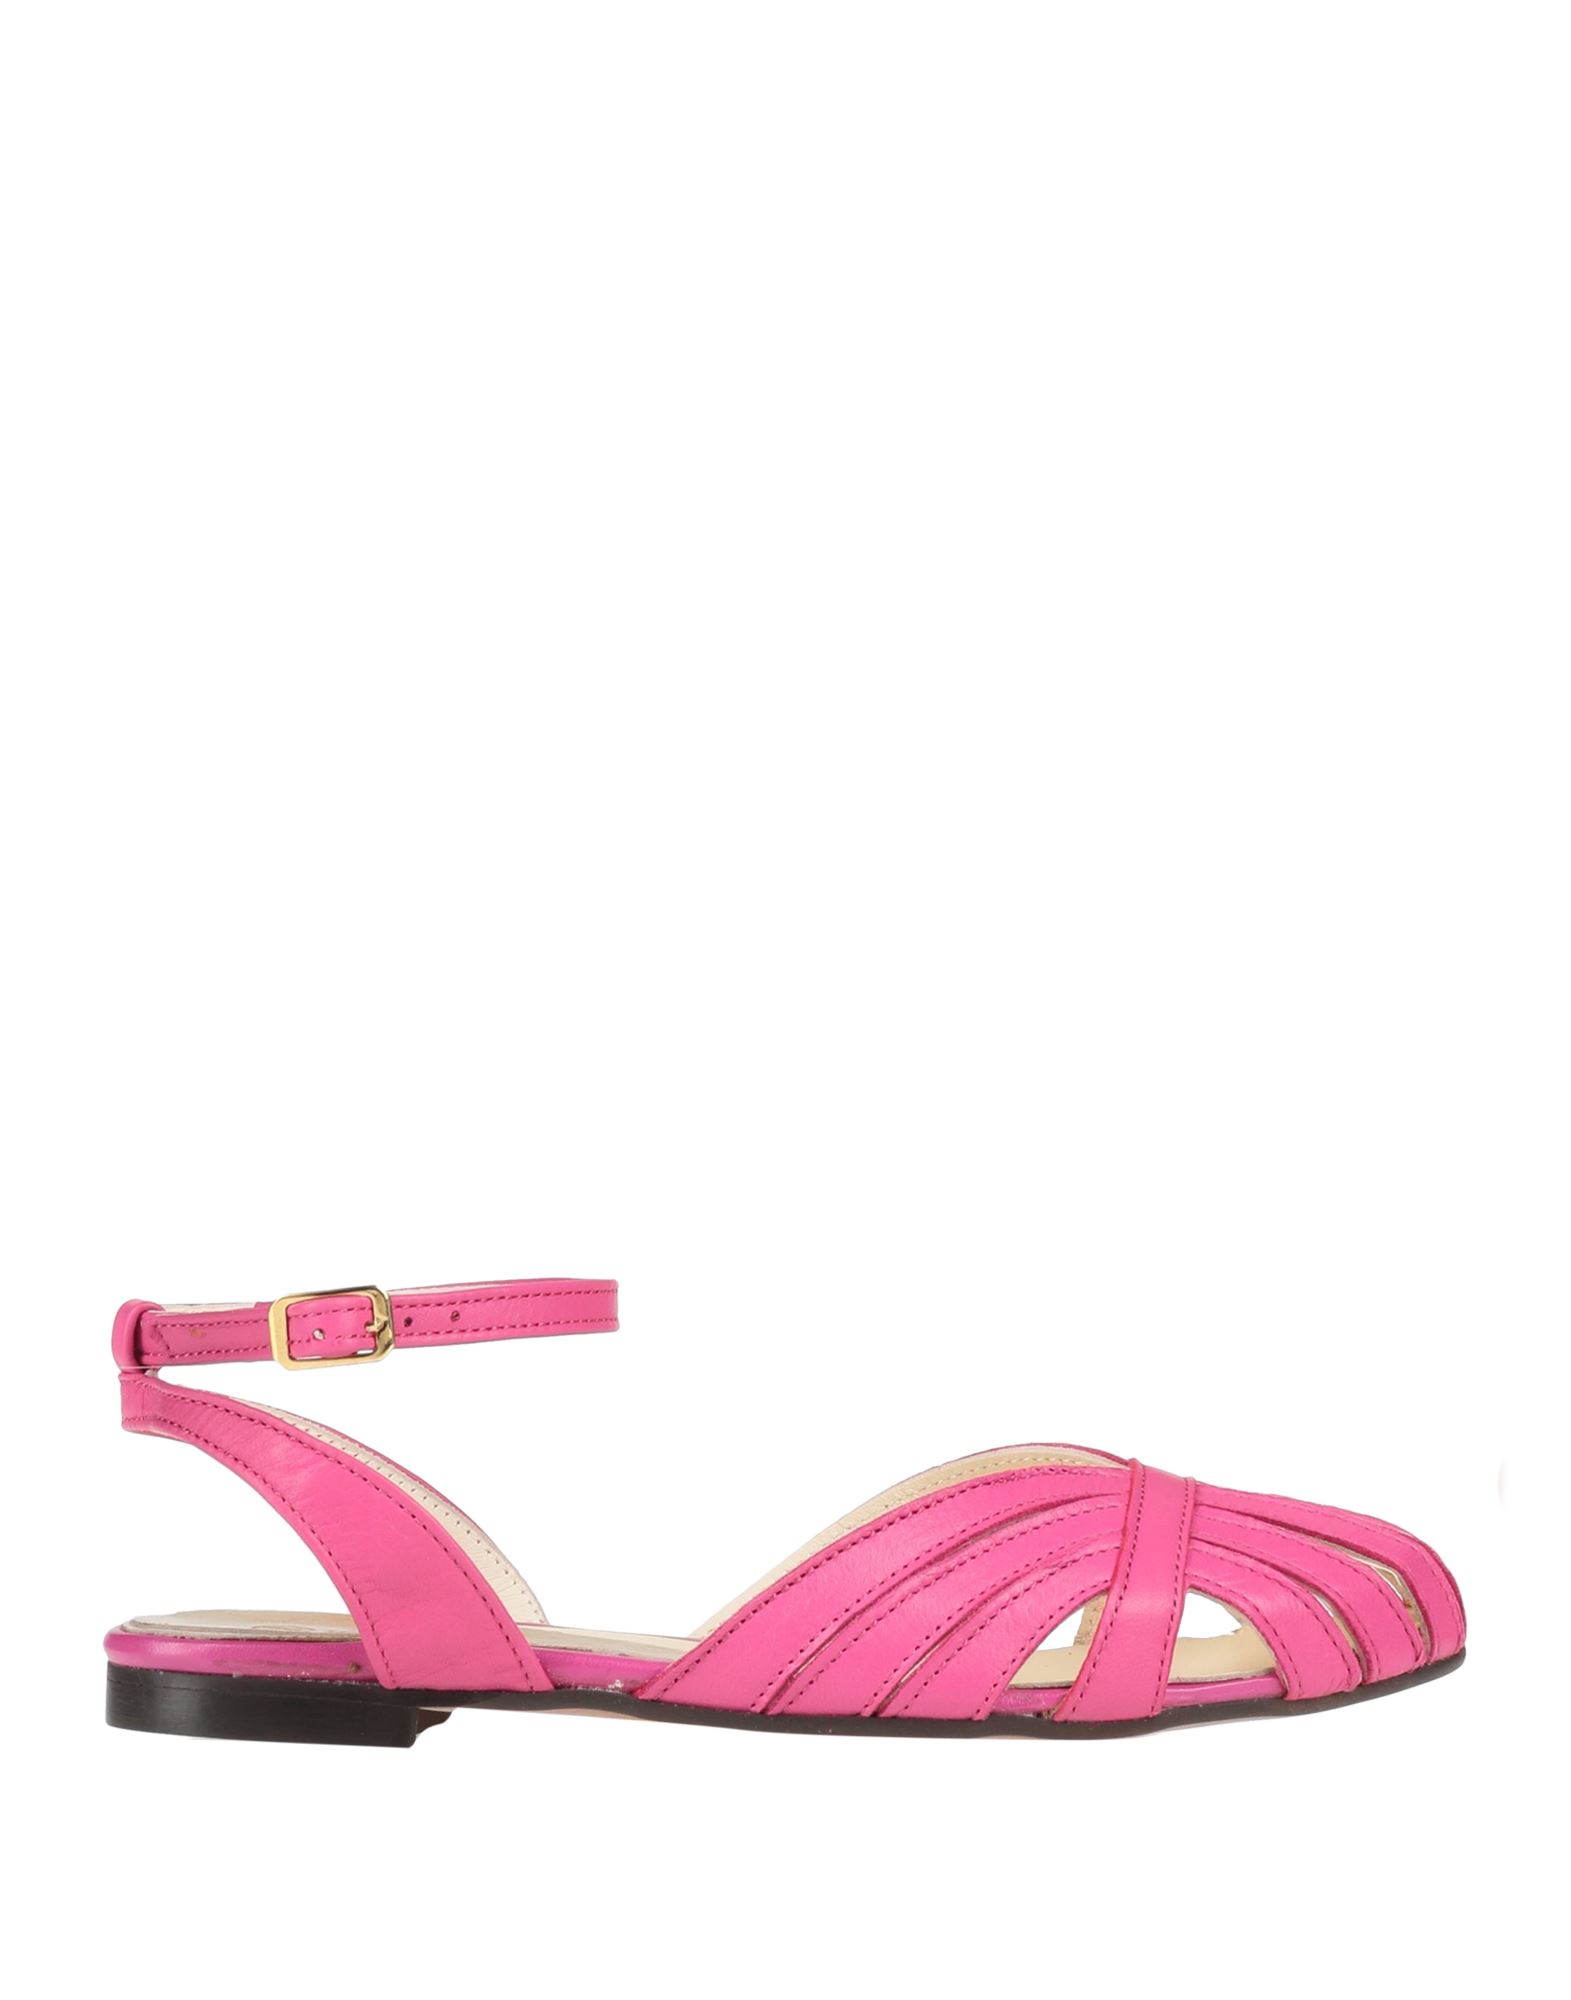 Loretta Pettinari Sandals In Pink